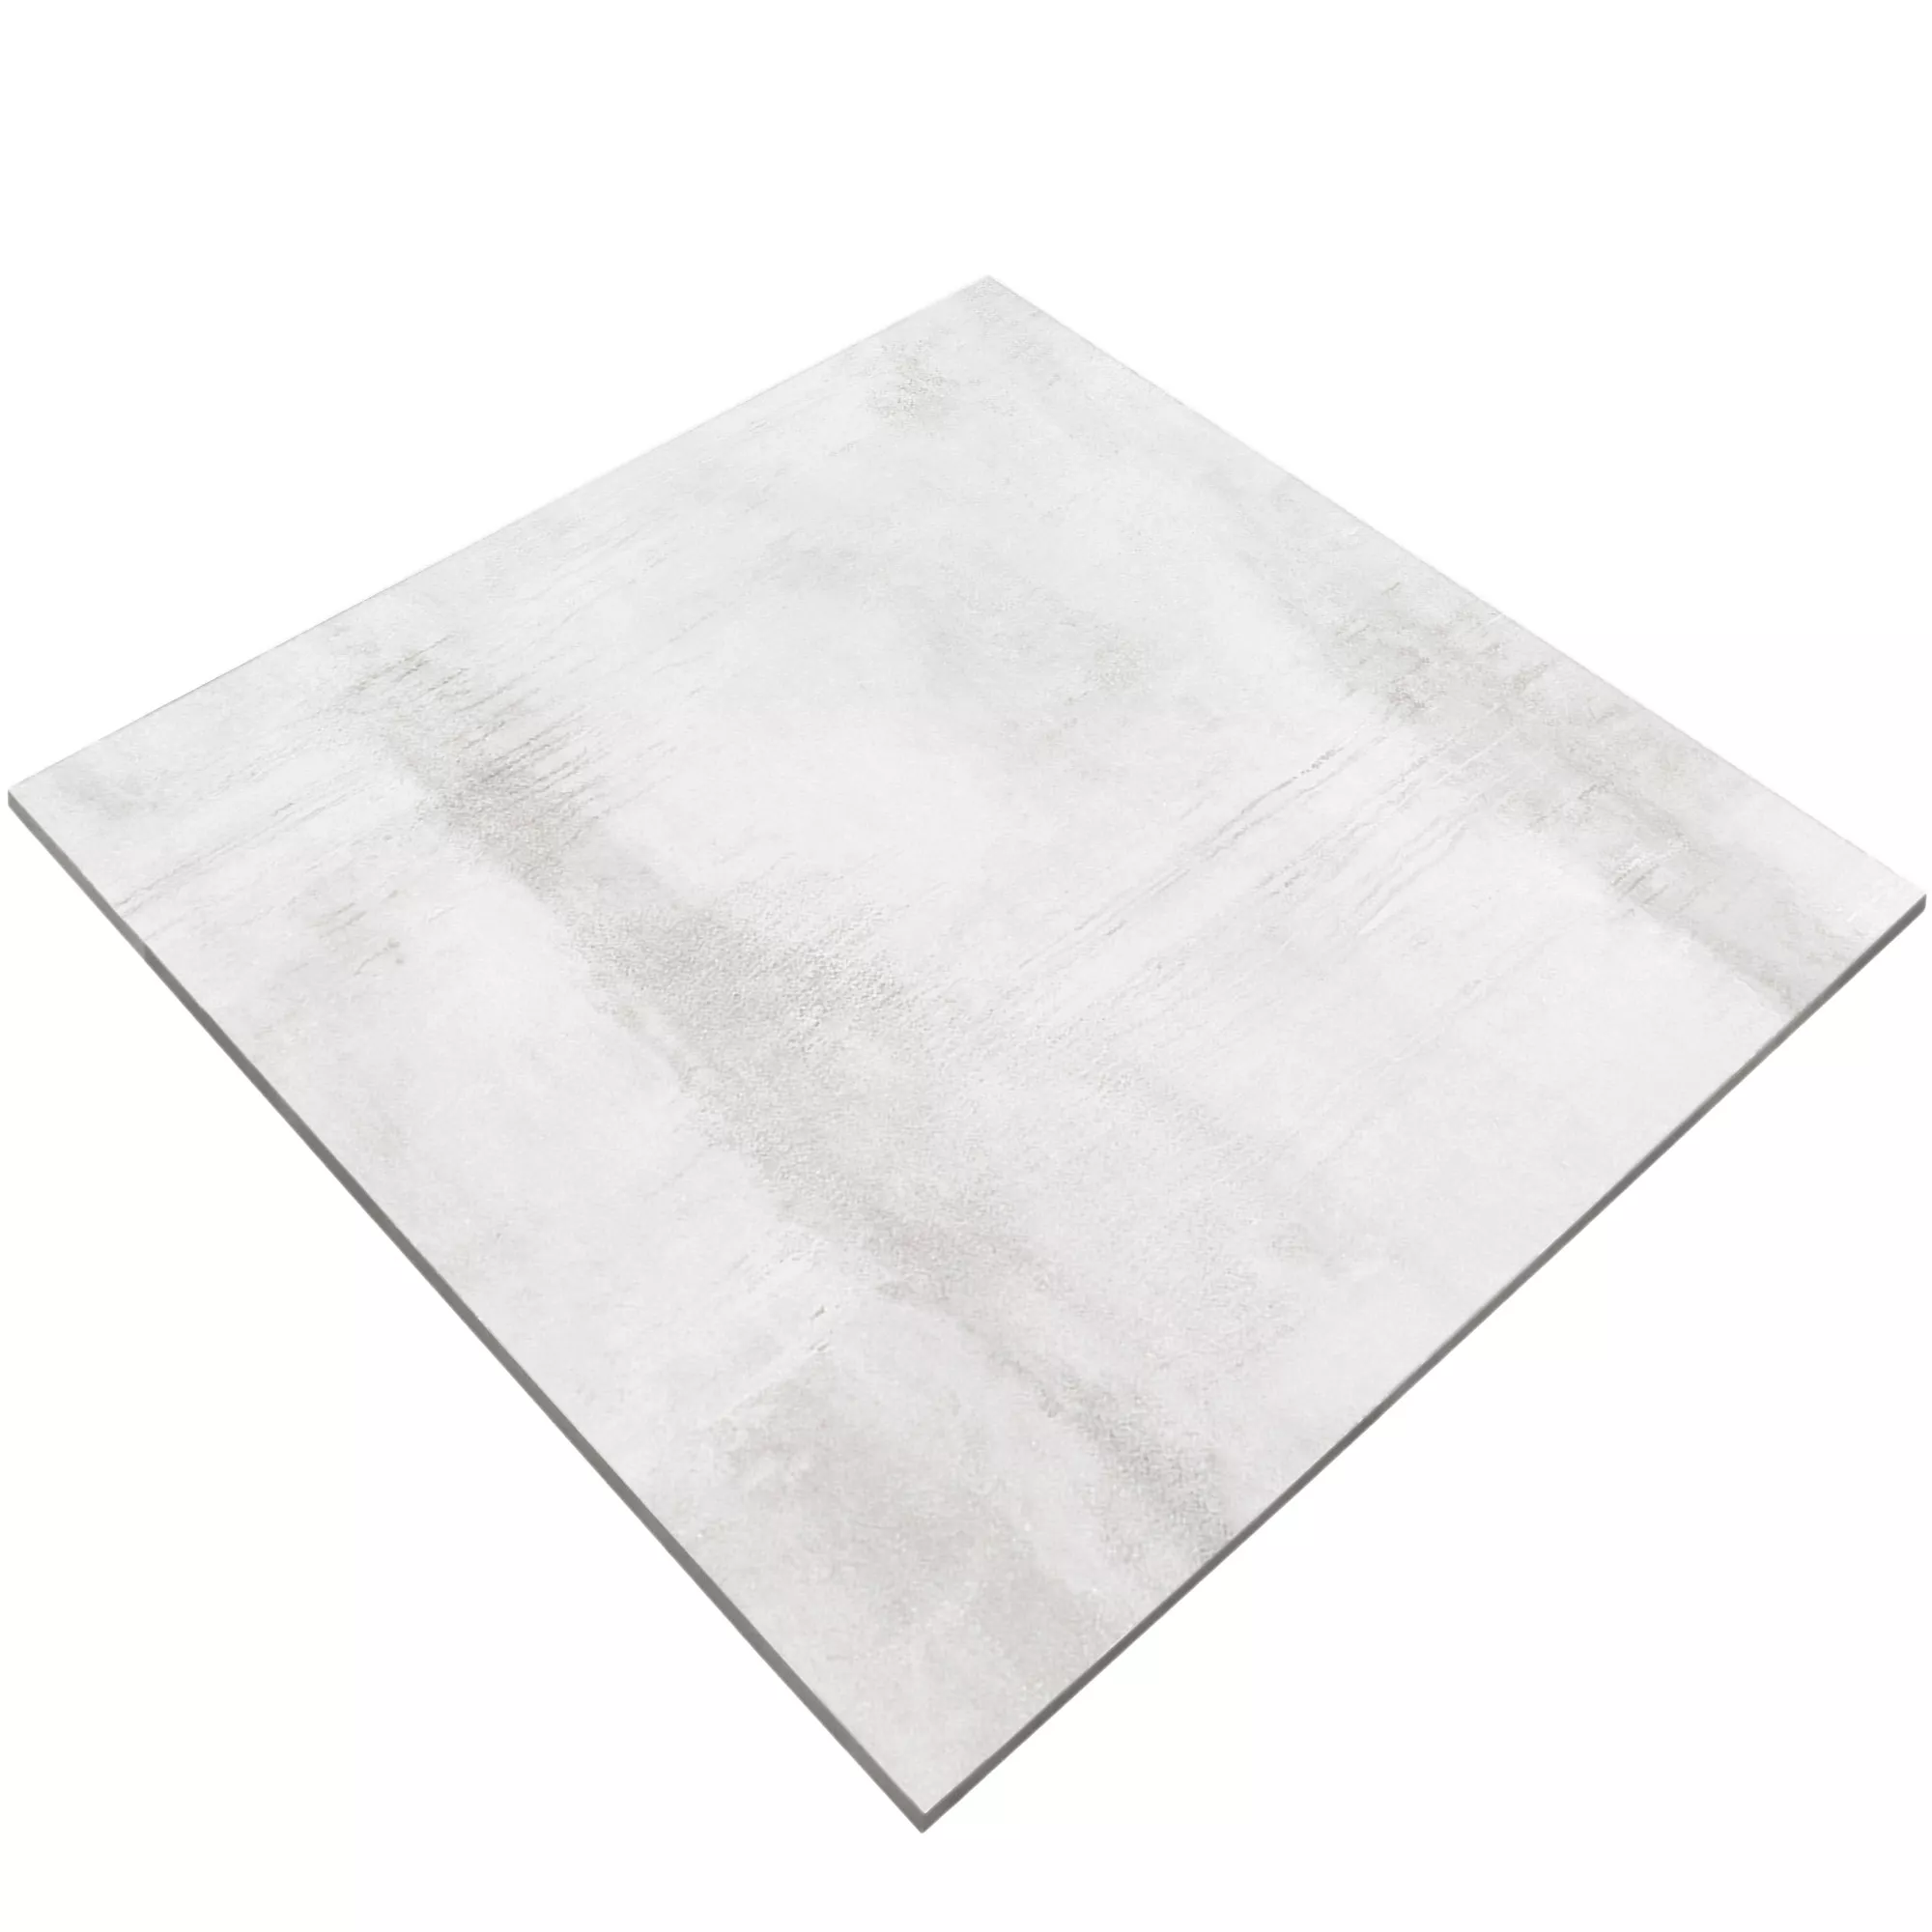 Vzorek Podlahové Dlaždice Tycoon Betonový Vzhled R10 Stříbrná 60x60cm